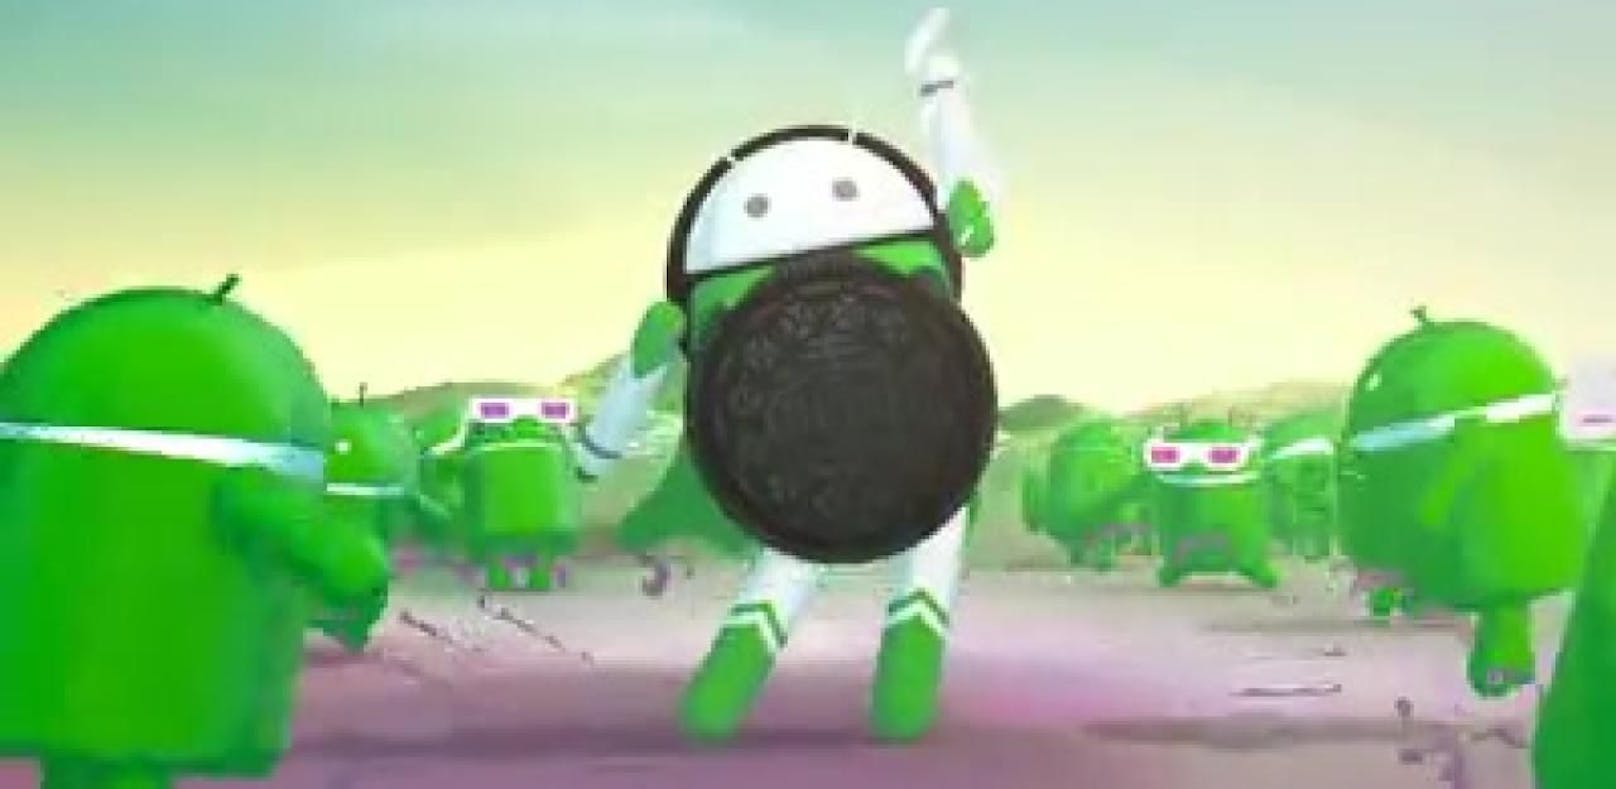 Das neue Android schmeckt nach Oreos